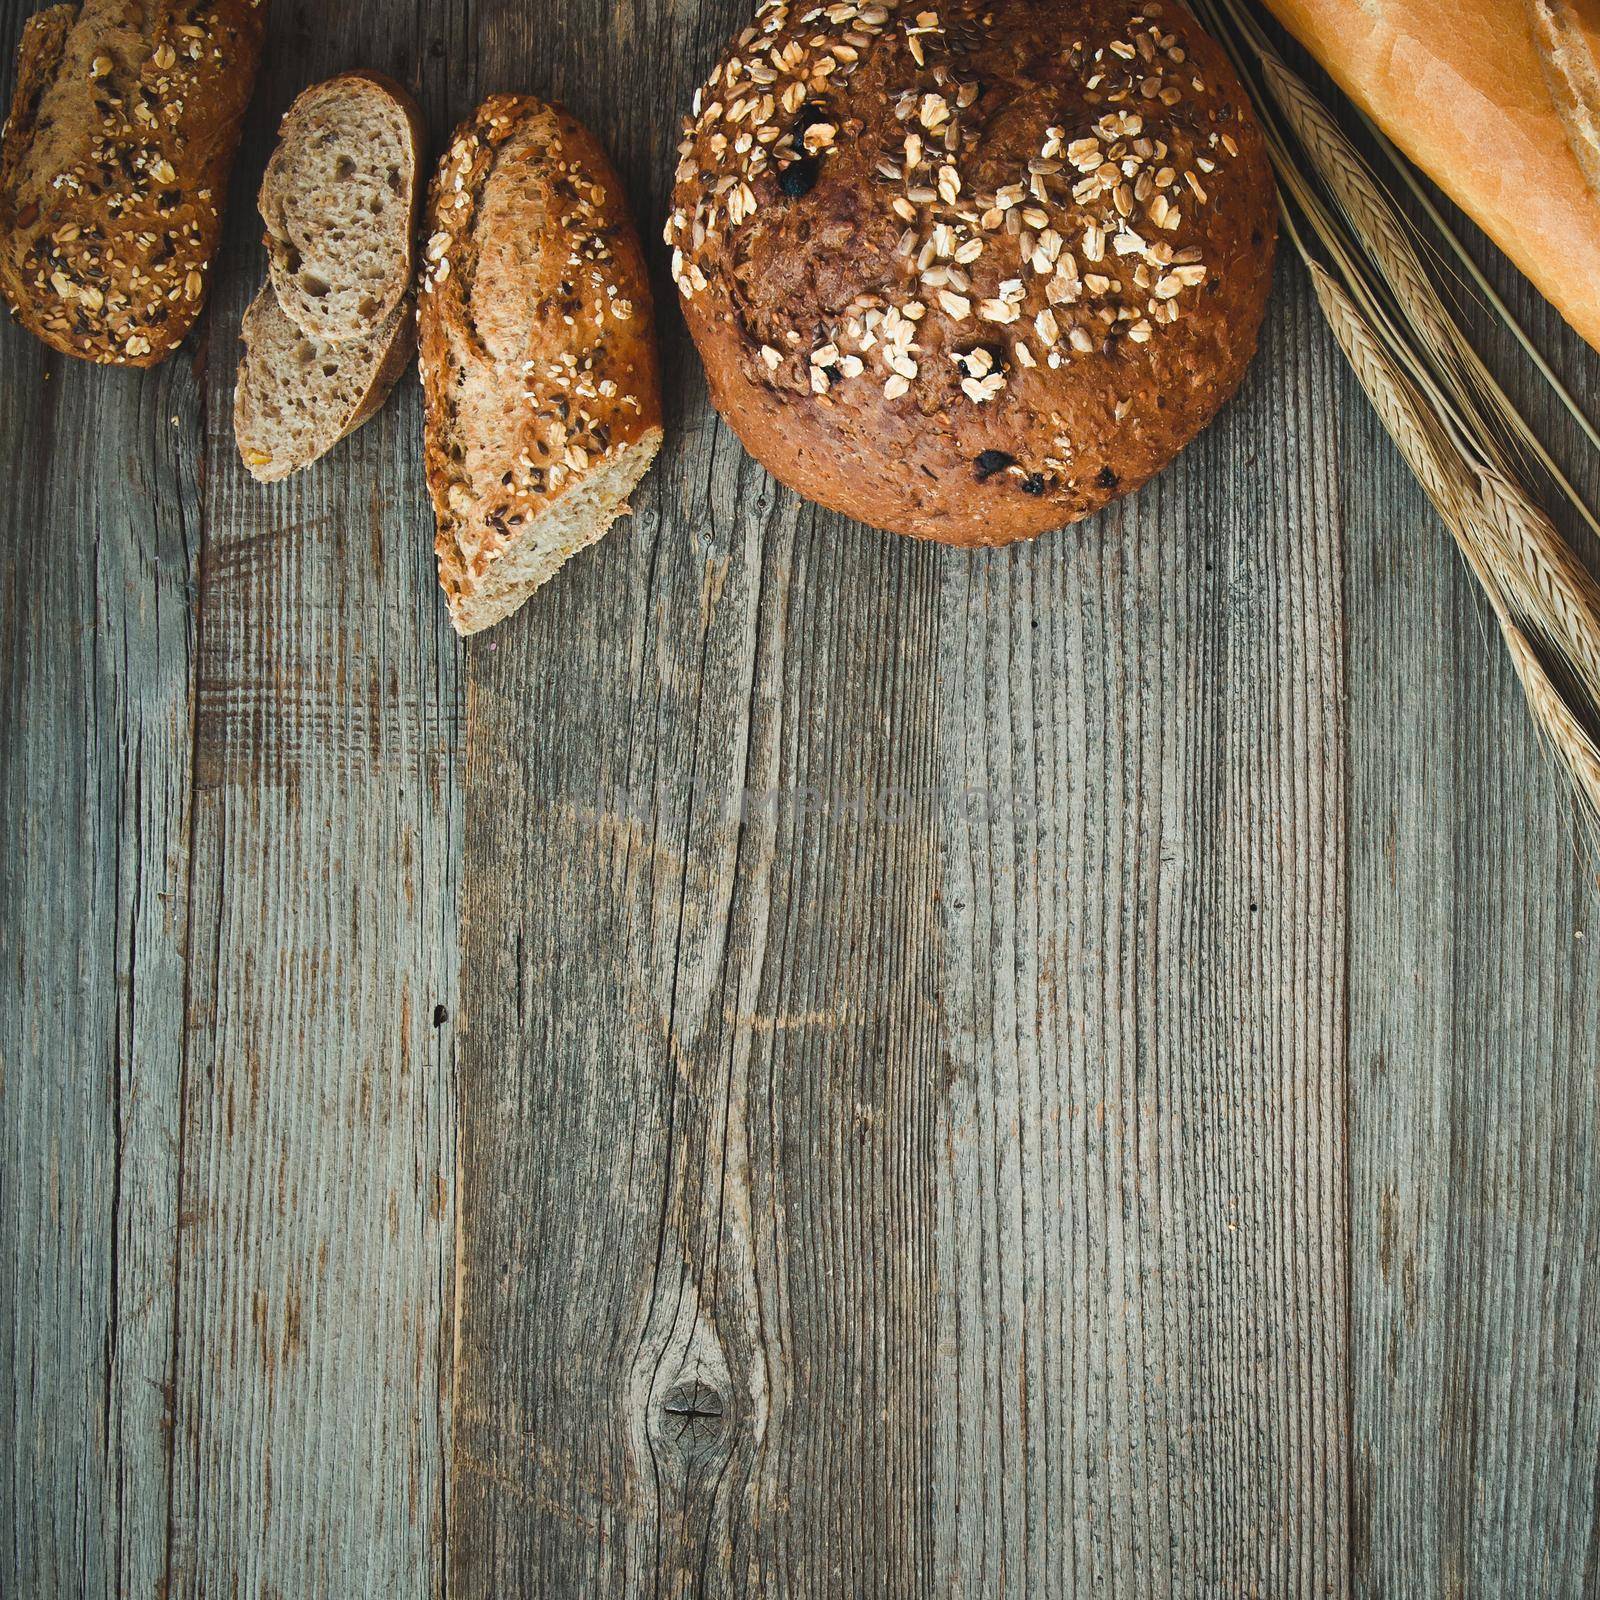 bread on a wooden background by tan4ikk1